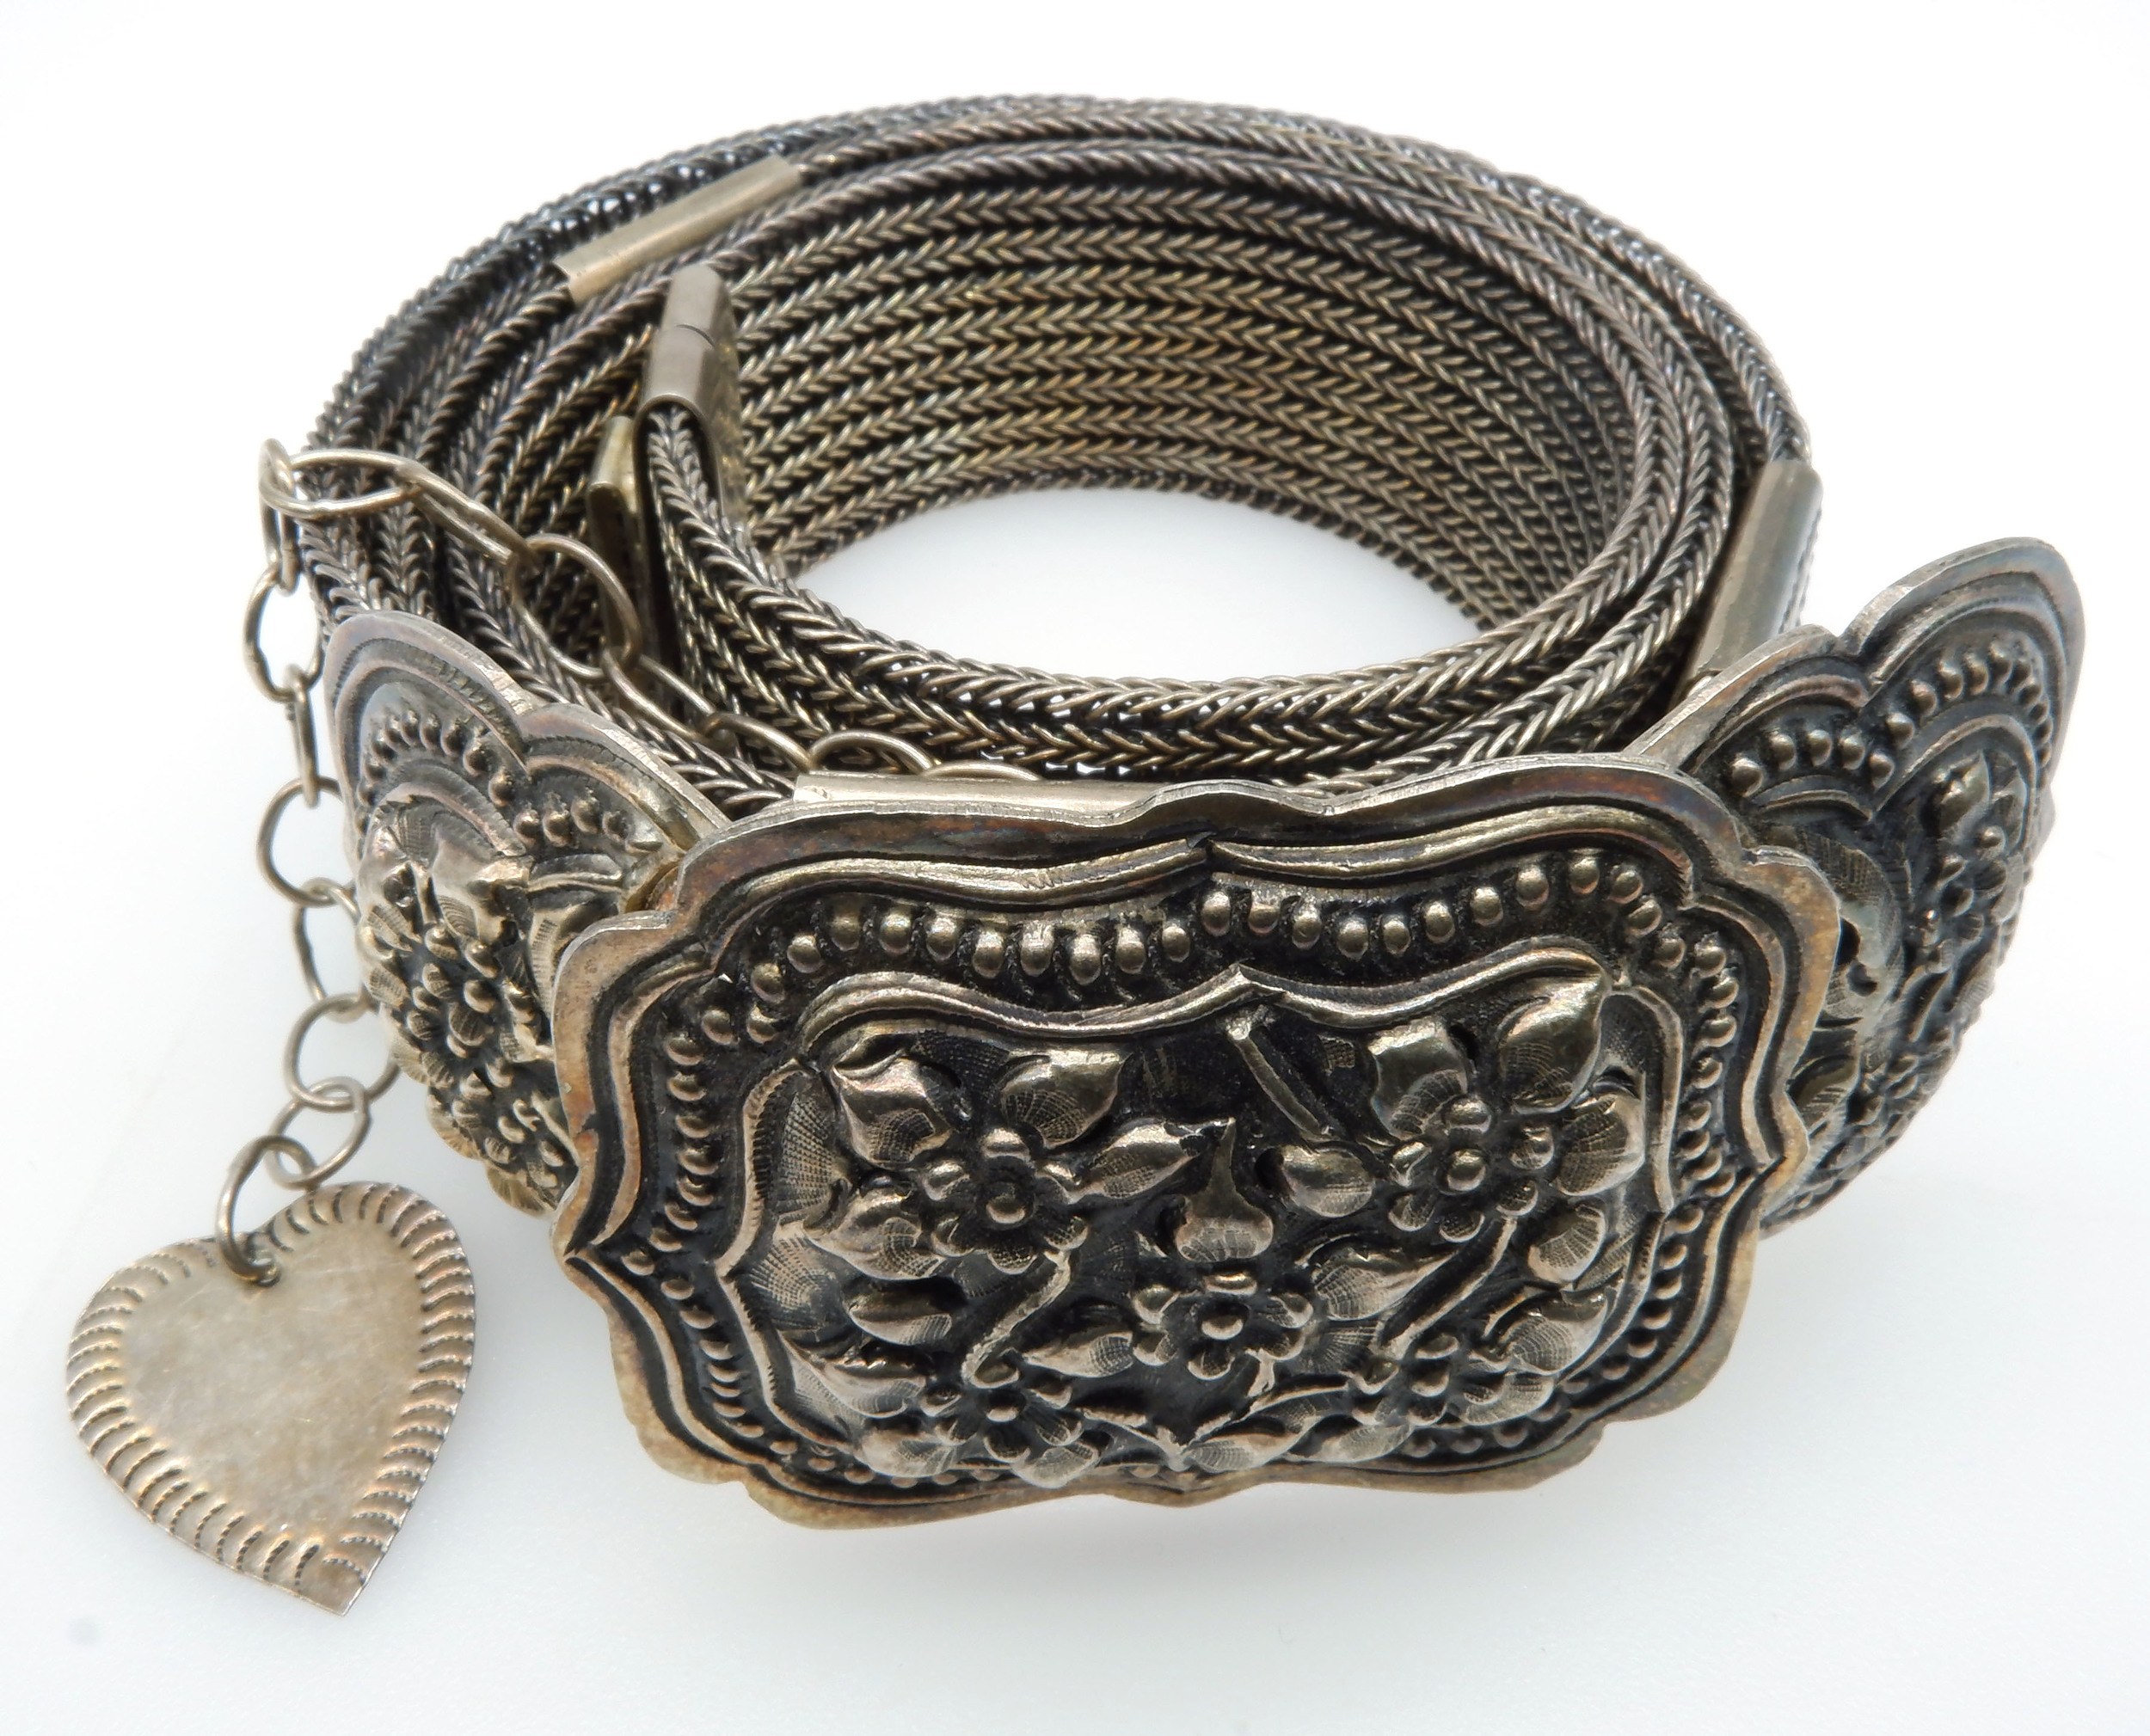 'Antique Metal Belt'